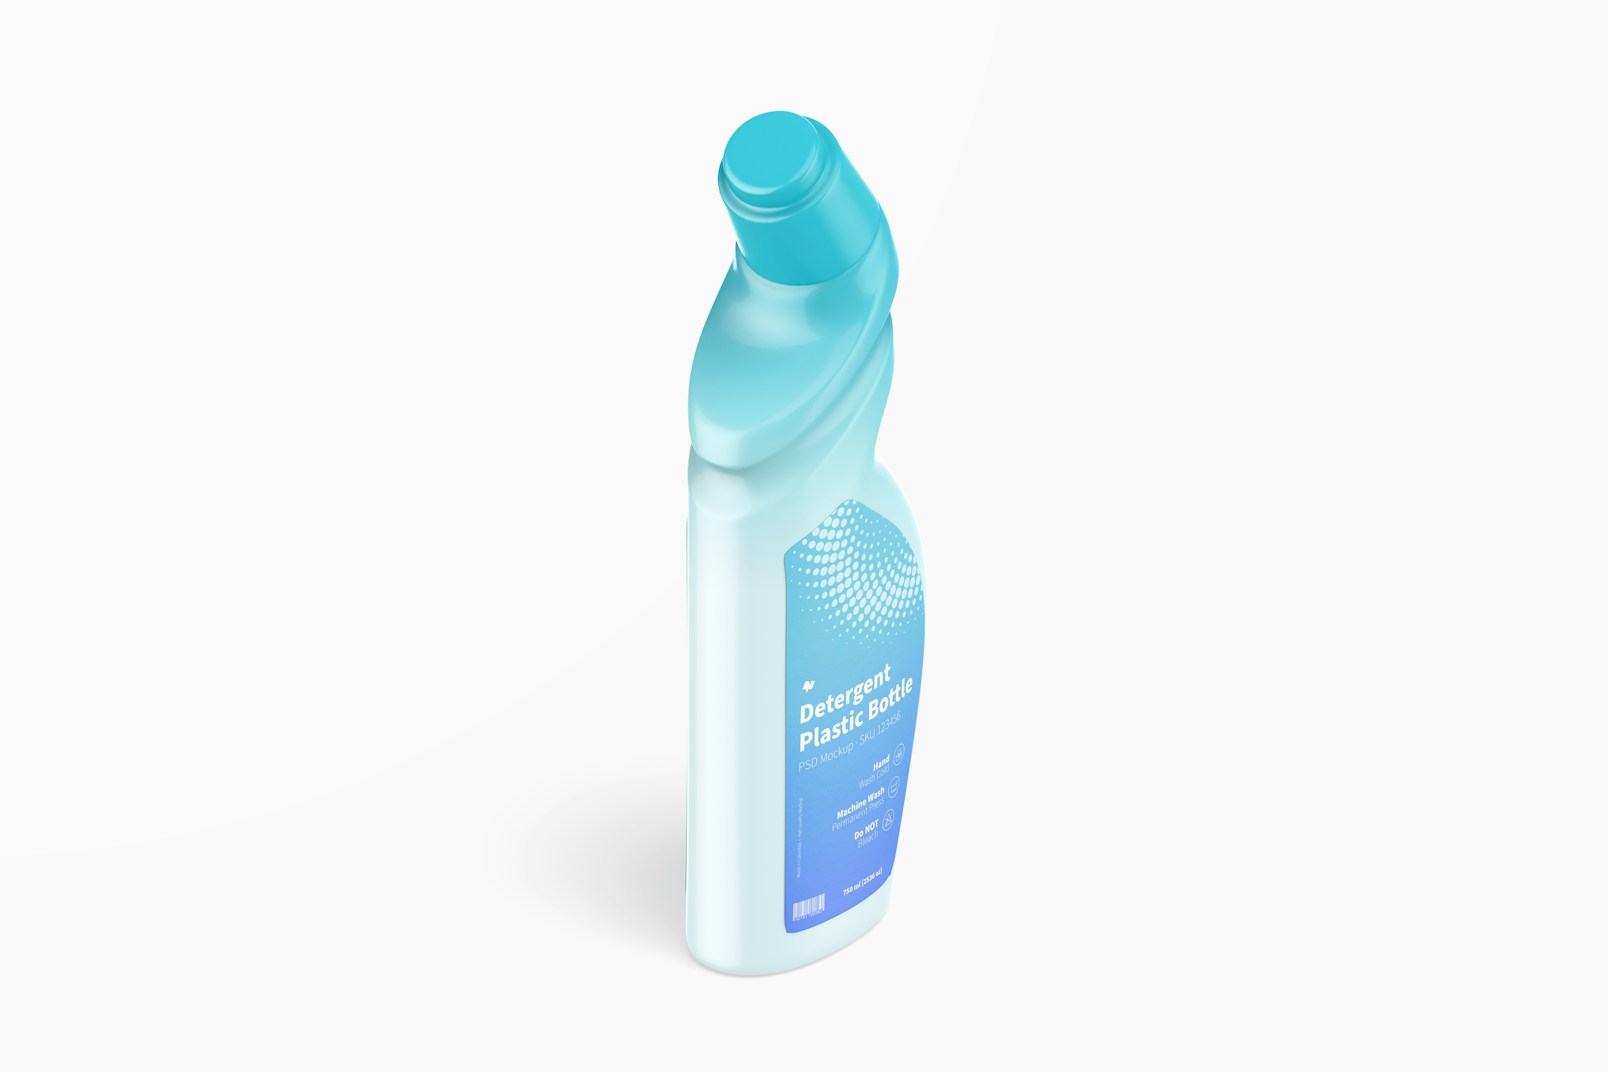 Detergent Plastic Bottle Mockup, Isometric Right View